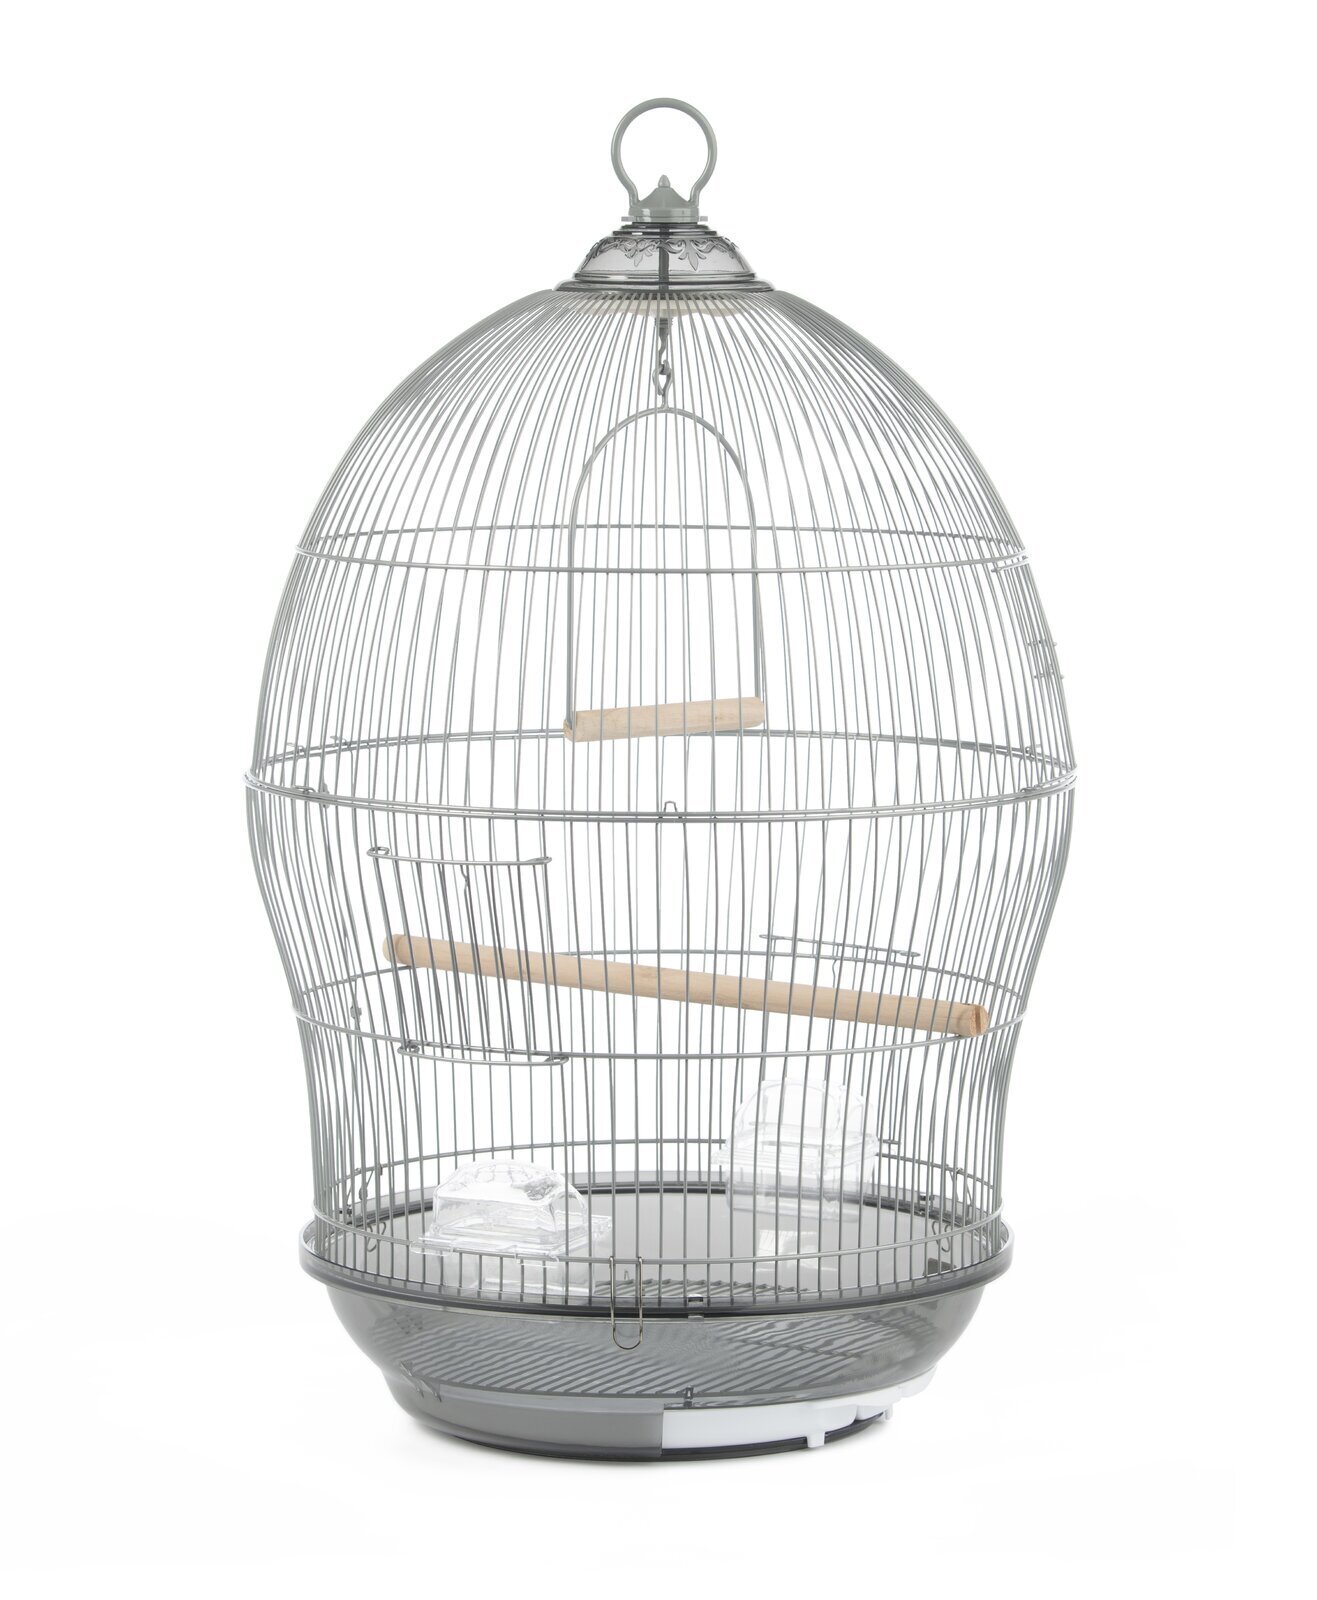 Decorative dome style modern bird cage